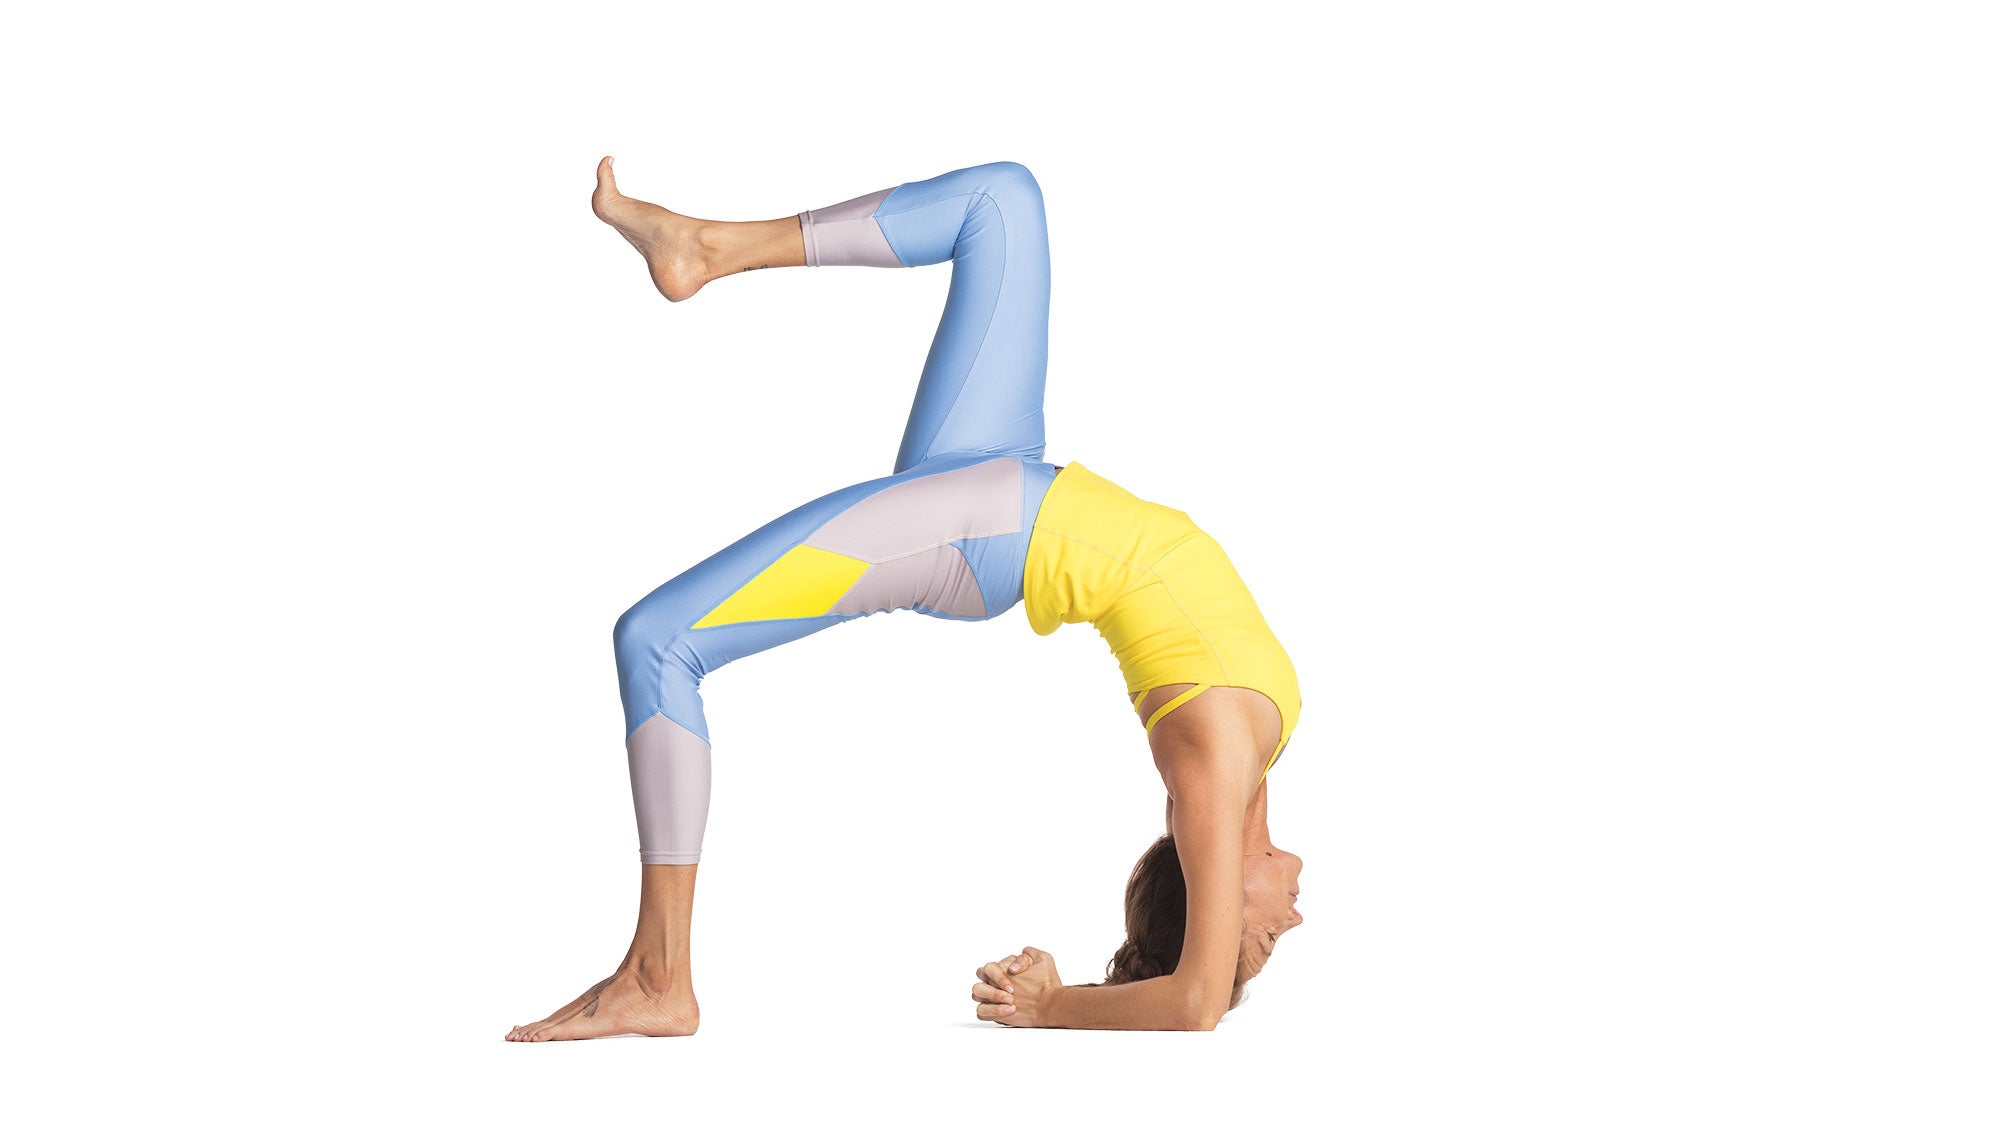 5 Advanced Yoga Poses and Exercises to Challenge Yourself